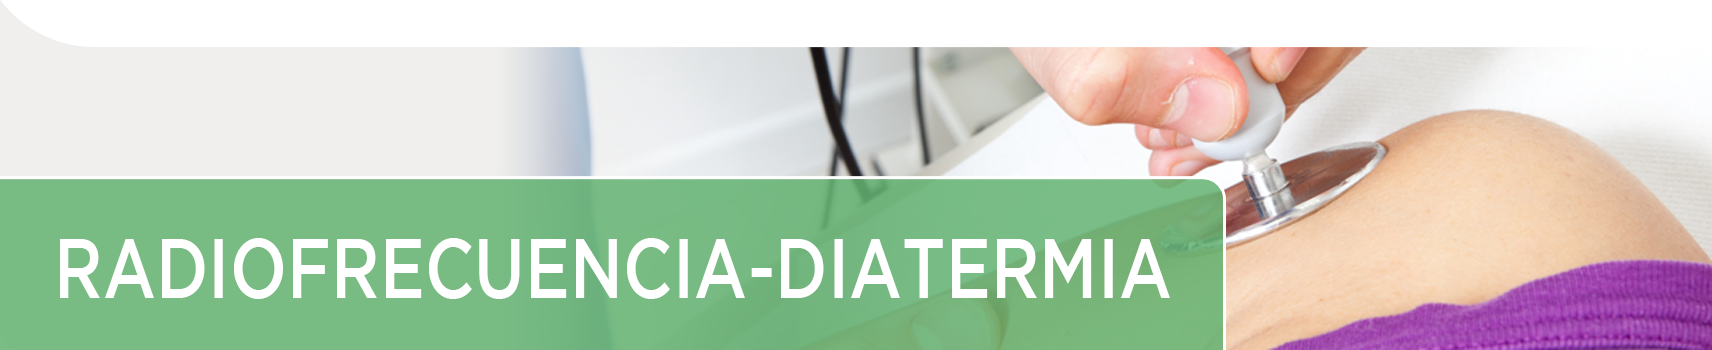 Radiofrecuencias-Diatermia